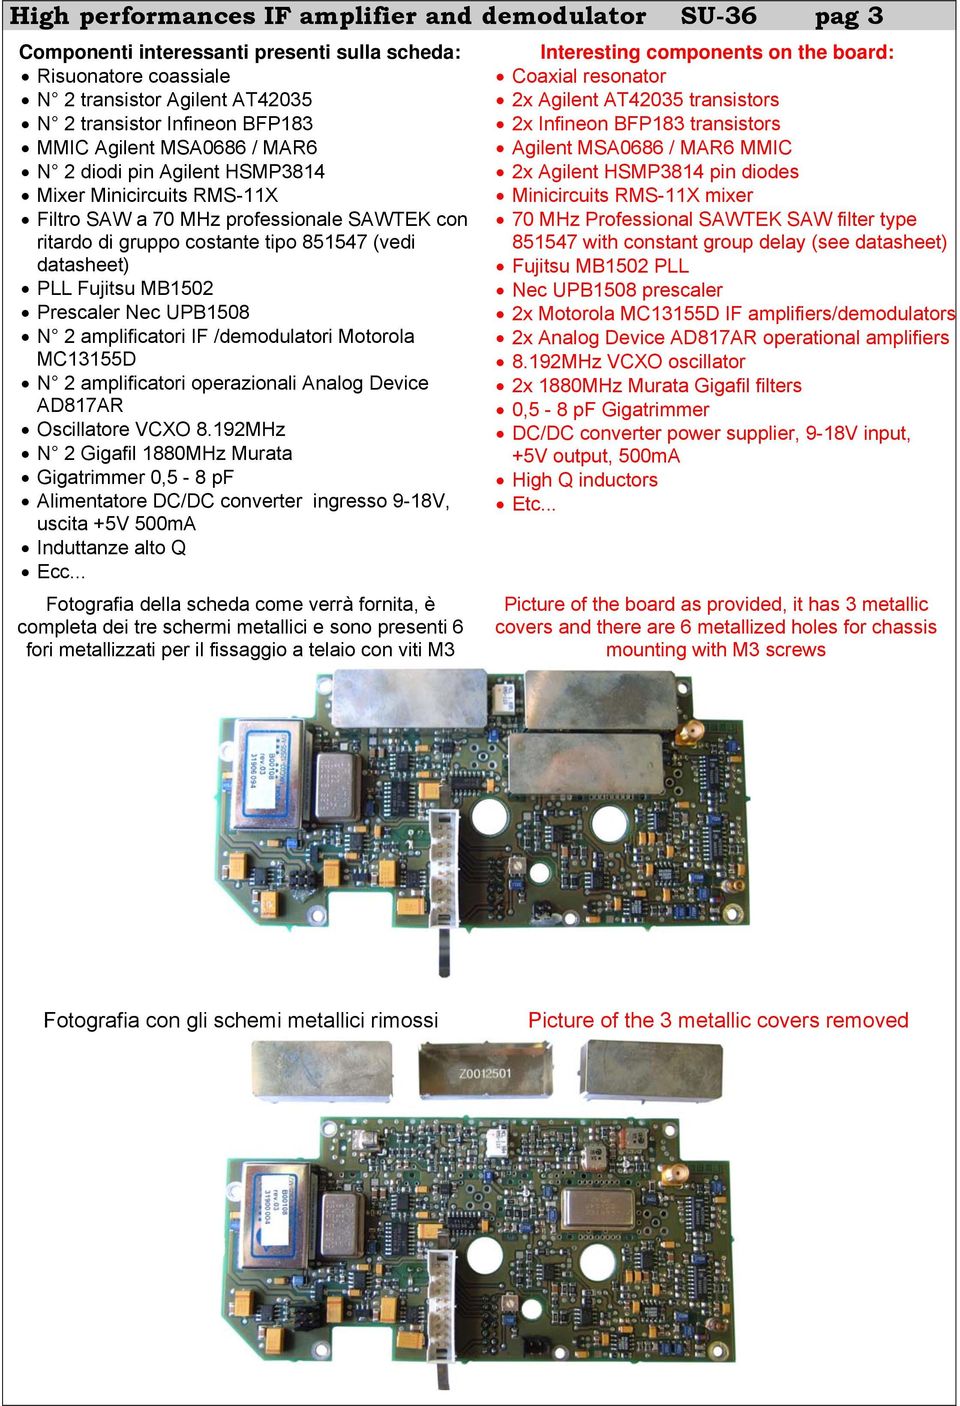 MB1502 Prescaler Nec UPB1508 N 2 amplificatori IF /demodulatori Motorola MC13155D N 2 amplificatori operazionali Analog Device AD817AR Oscillatore VCXO 8.